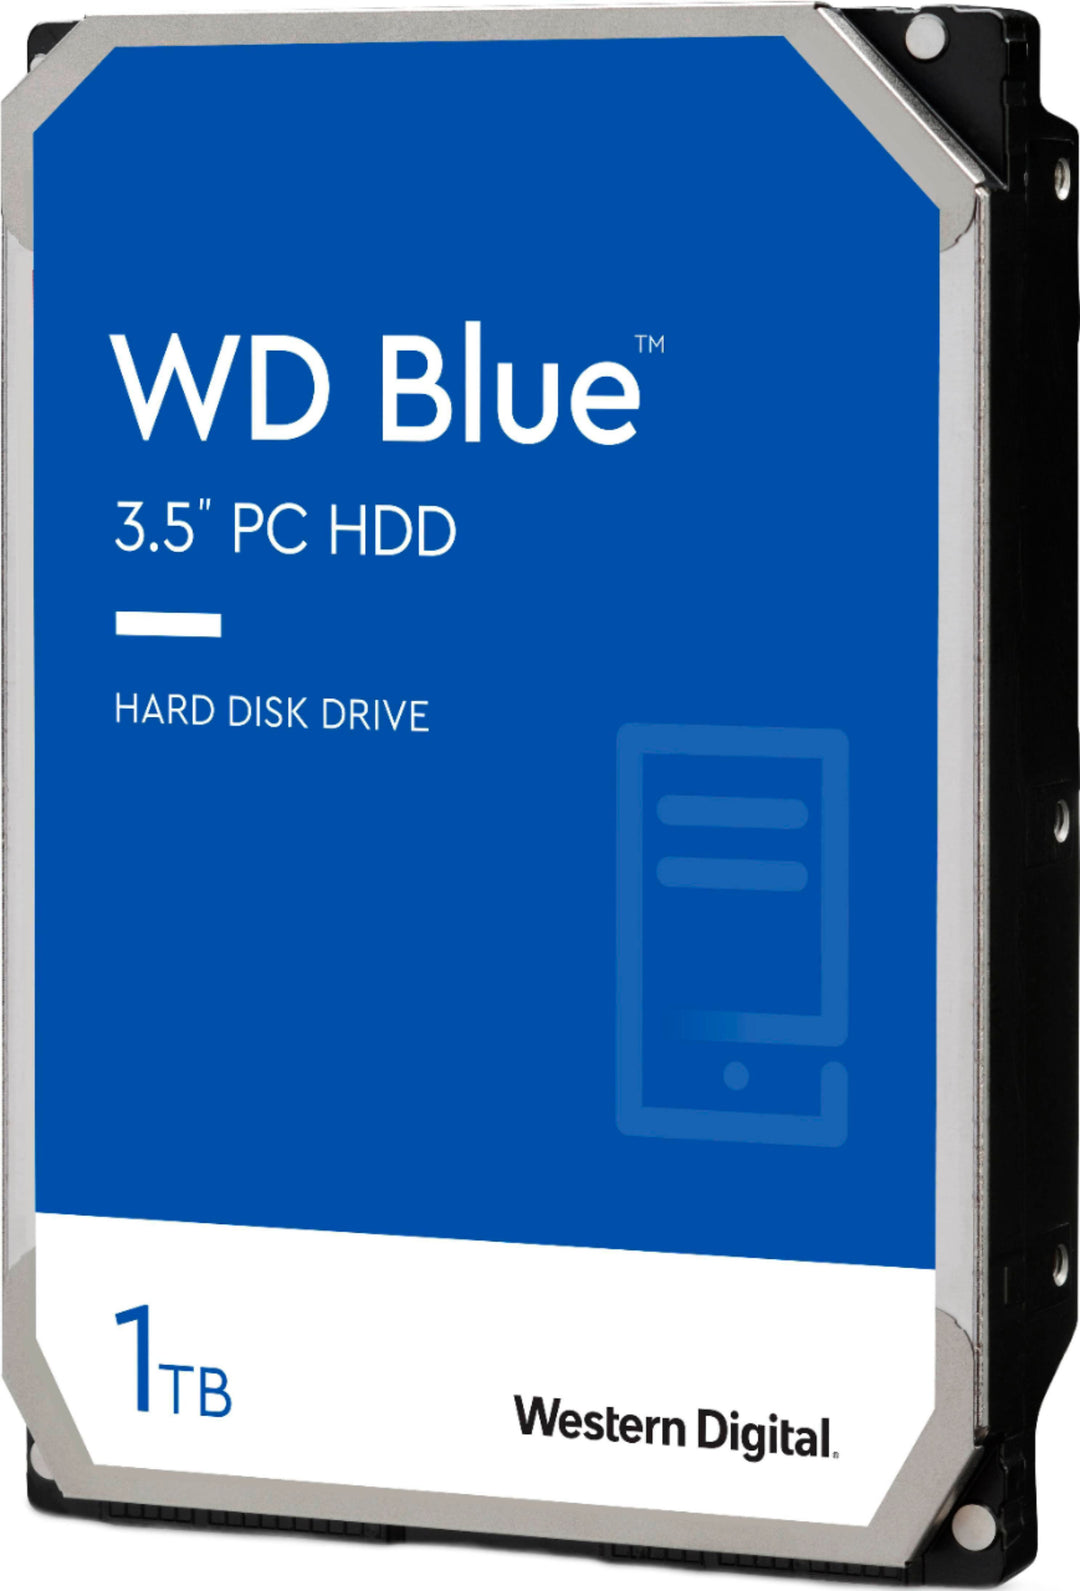 WD - Blue 1TB Internal SATA Hard Drive for Desktops_1